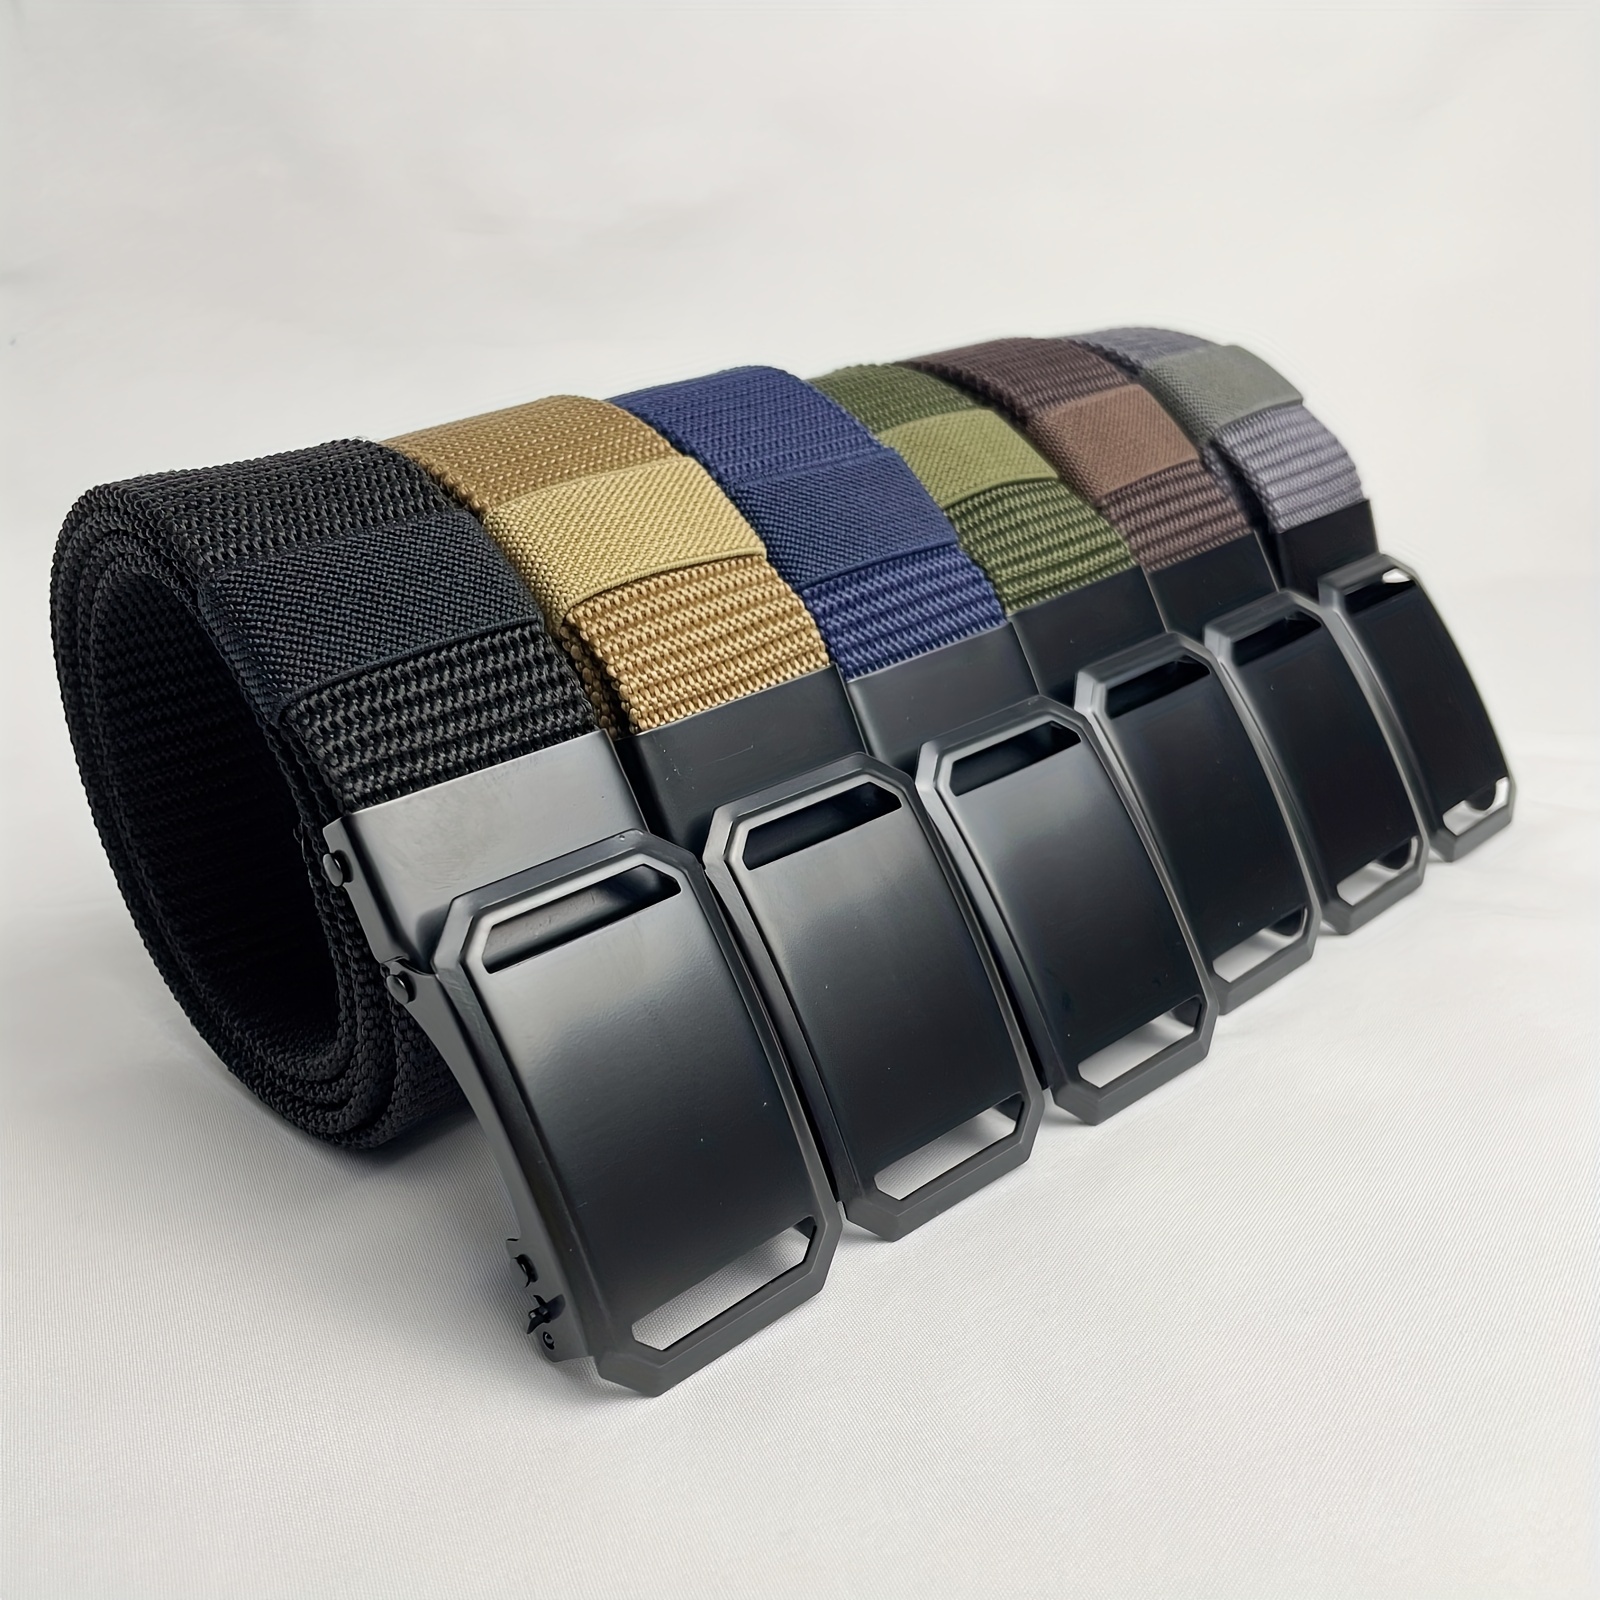 

Men's Leisure Fashion Belt Outdoor Training Belt Imitation Nylon Canvas Belt Colorful Multi Color Belt